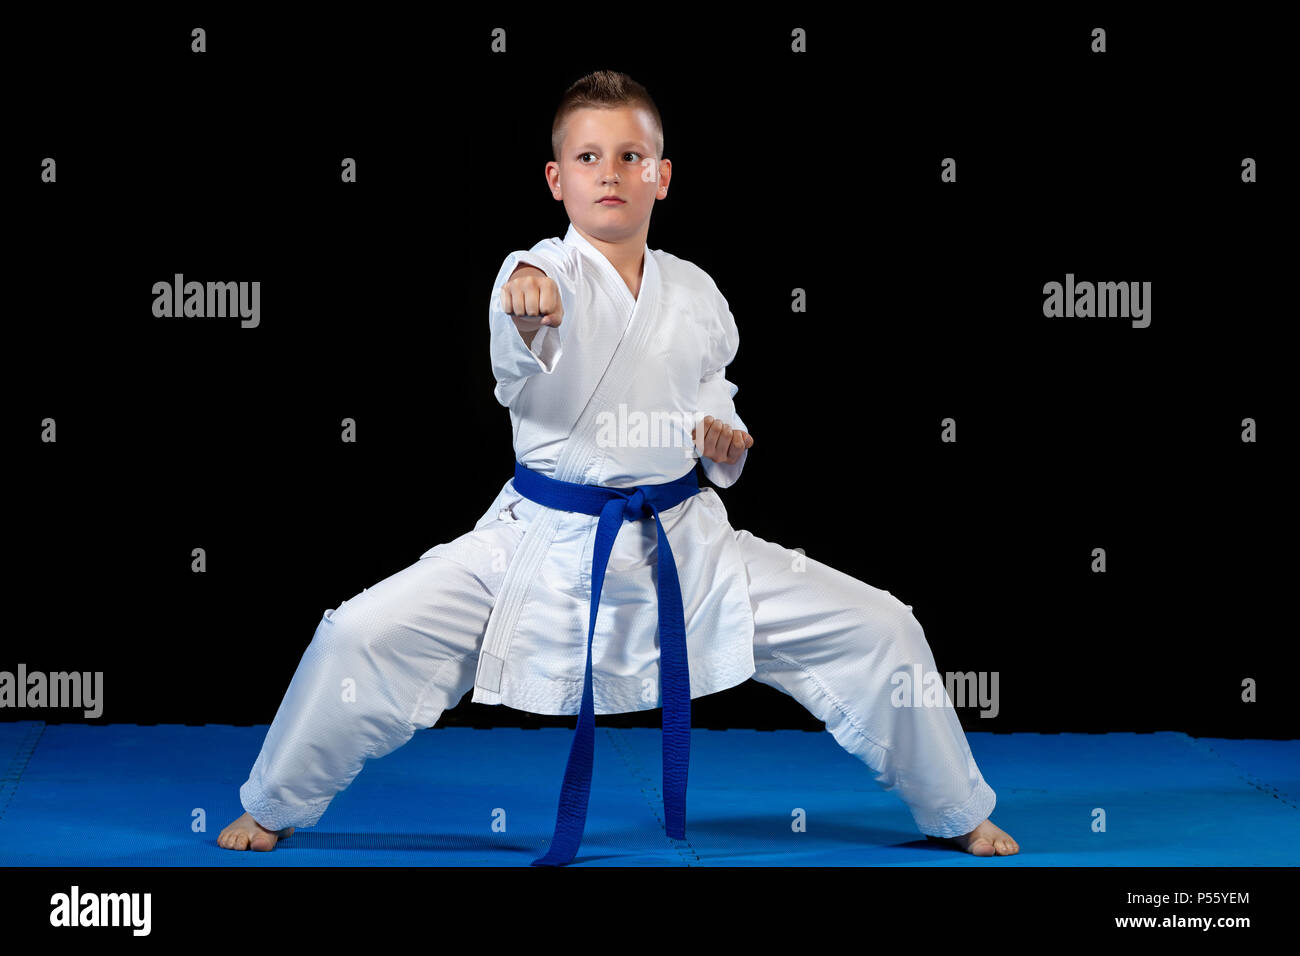 Pre-teen boy doing karate on a black background Stock Photo